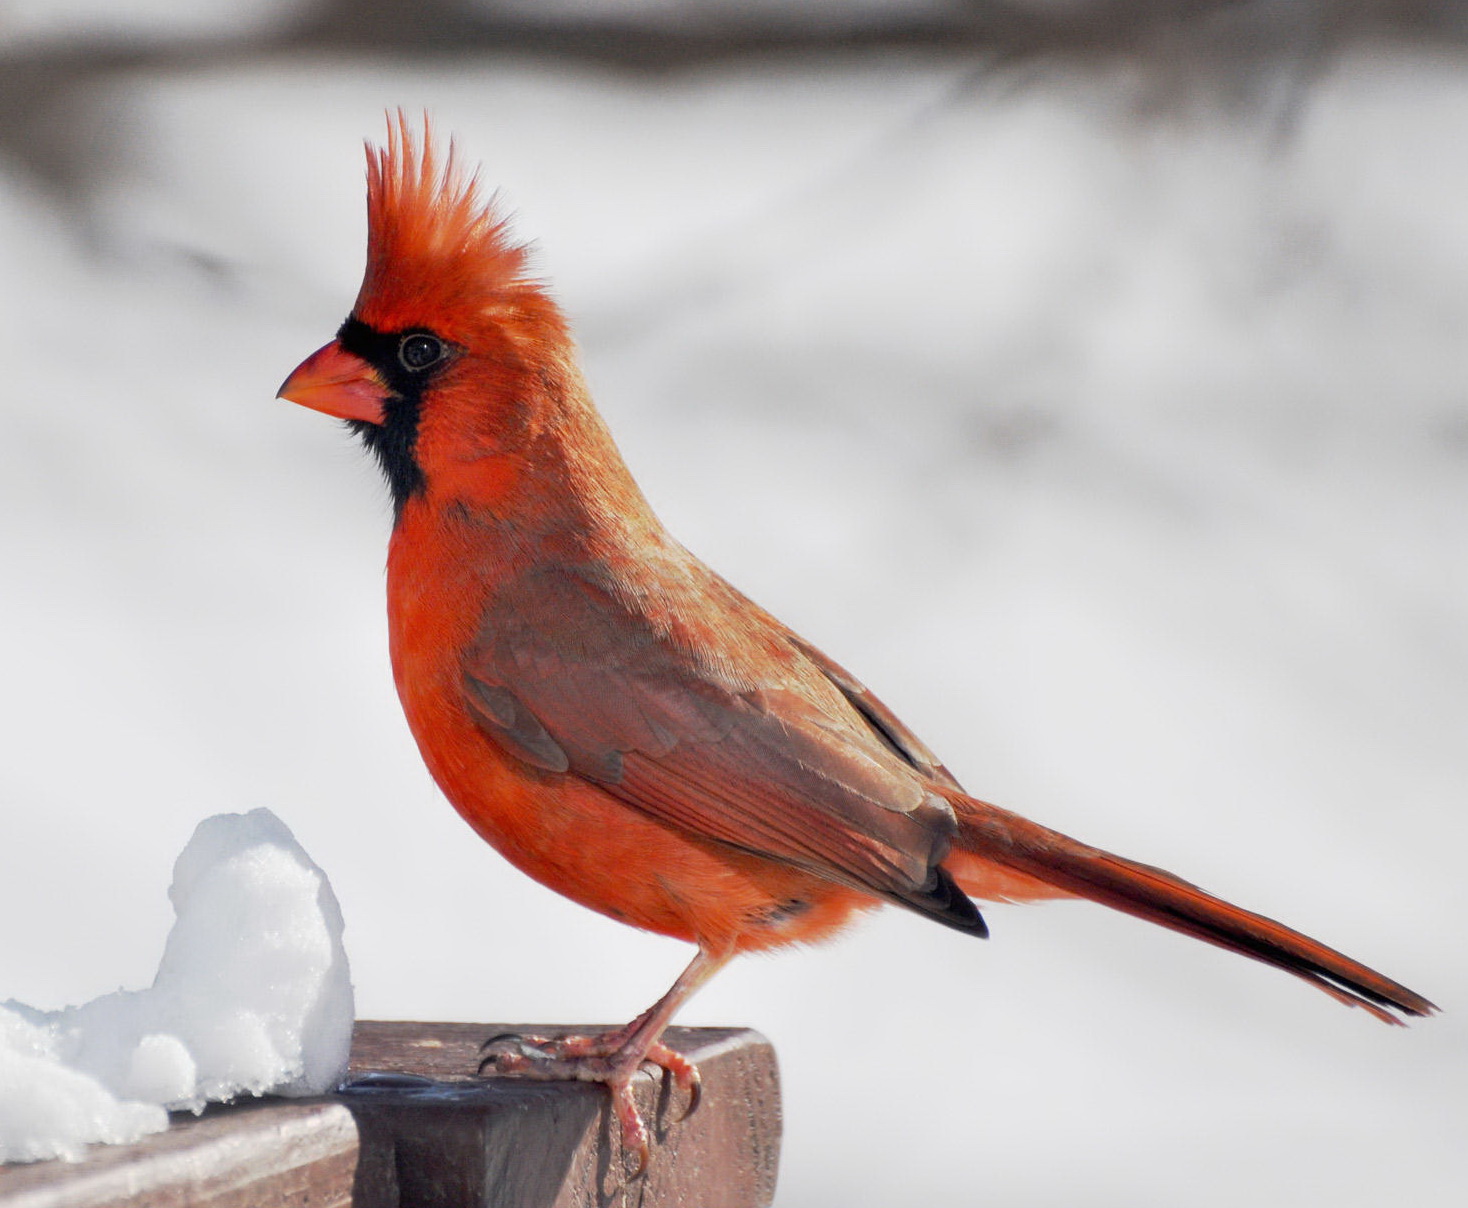 Associated image for entry 'cardinal (bird)'